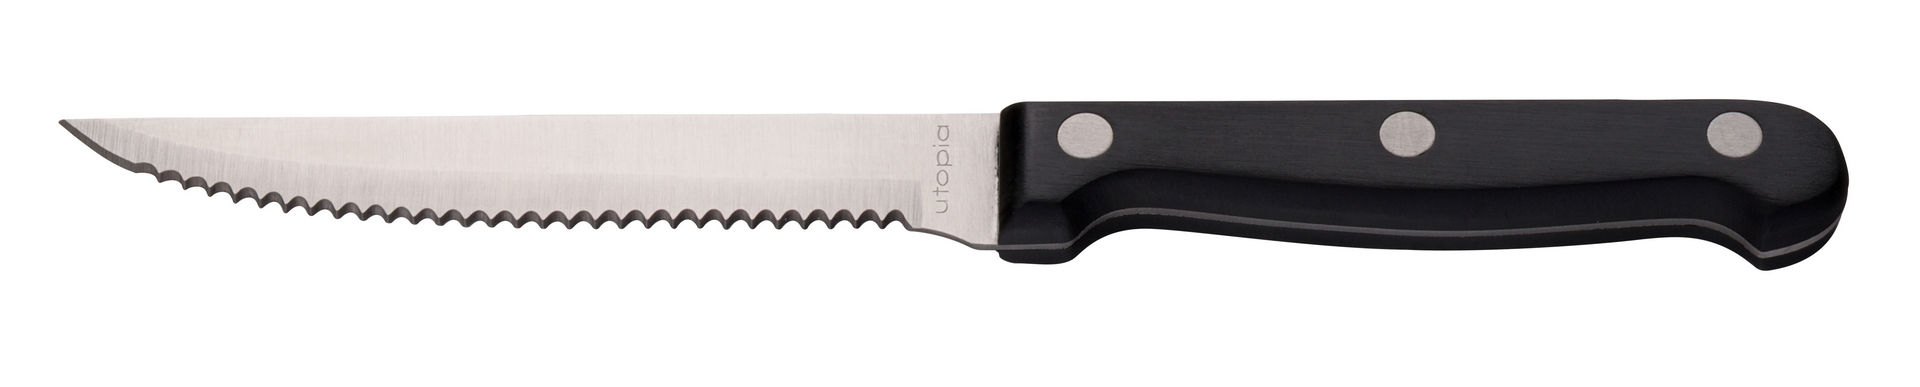 Black Handled Steak Knife - F10643-000000-B01012 (Pack of 12)